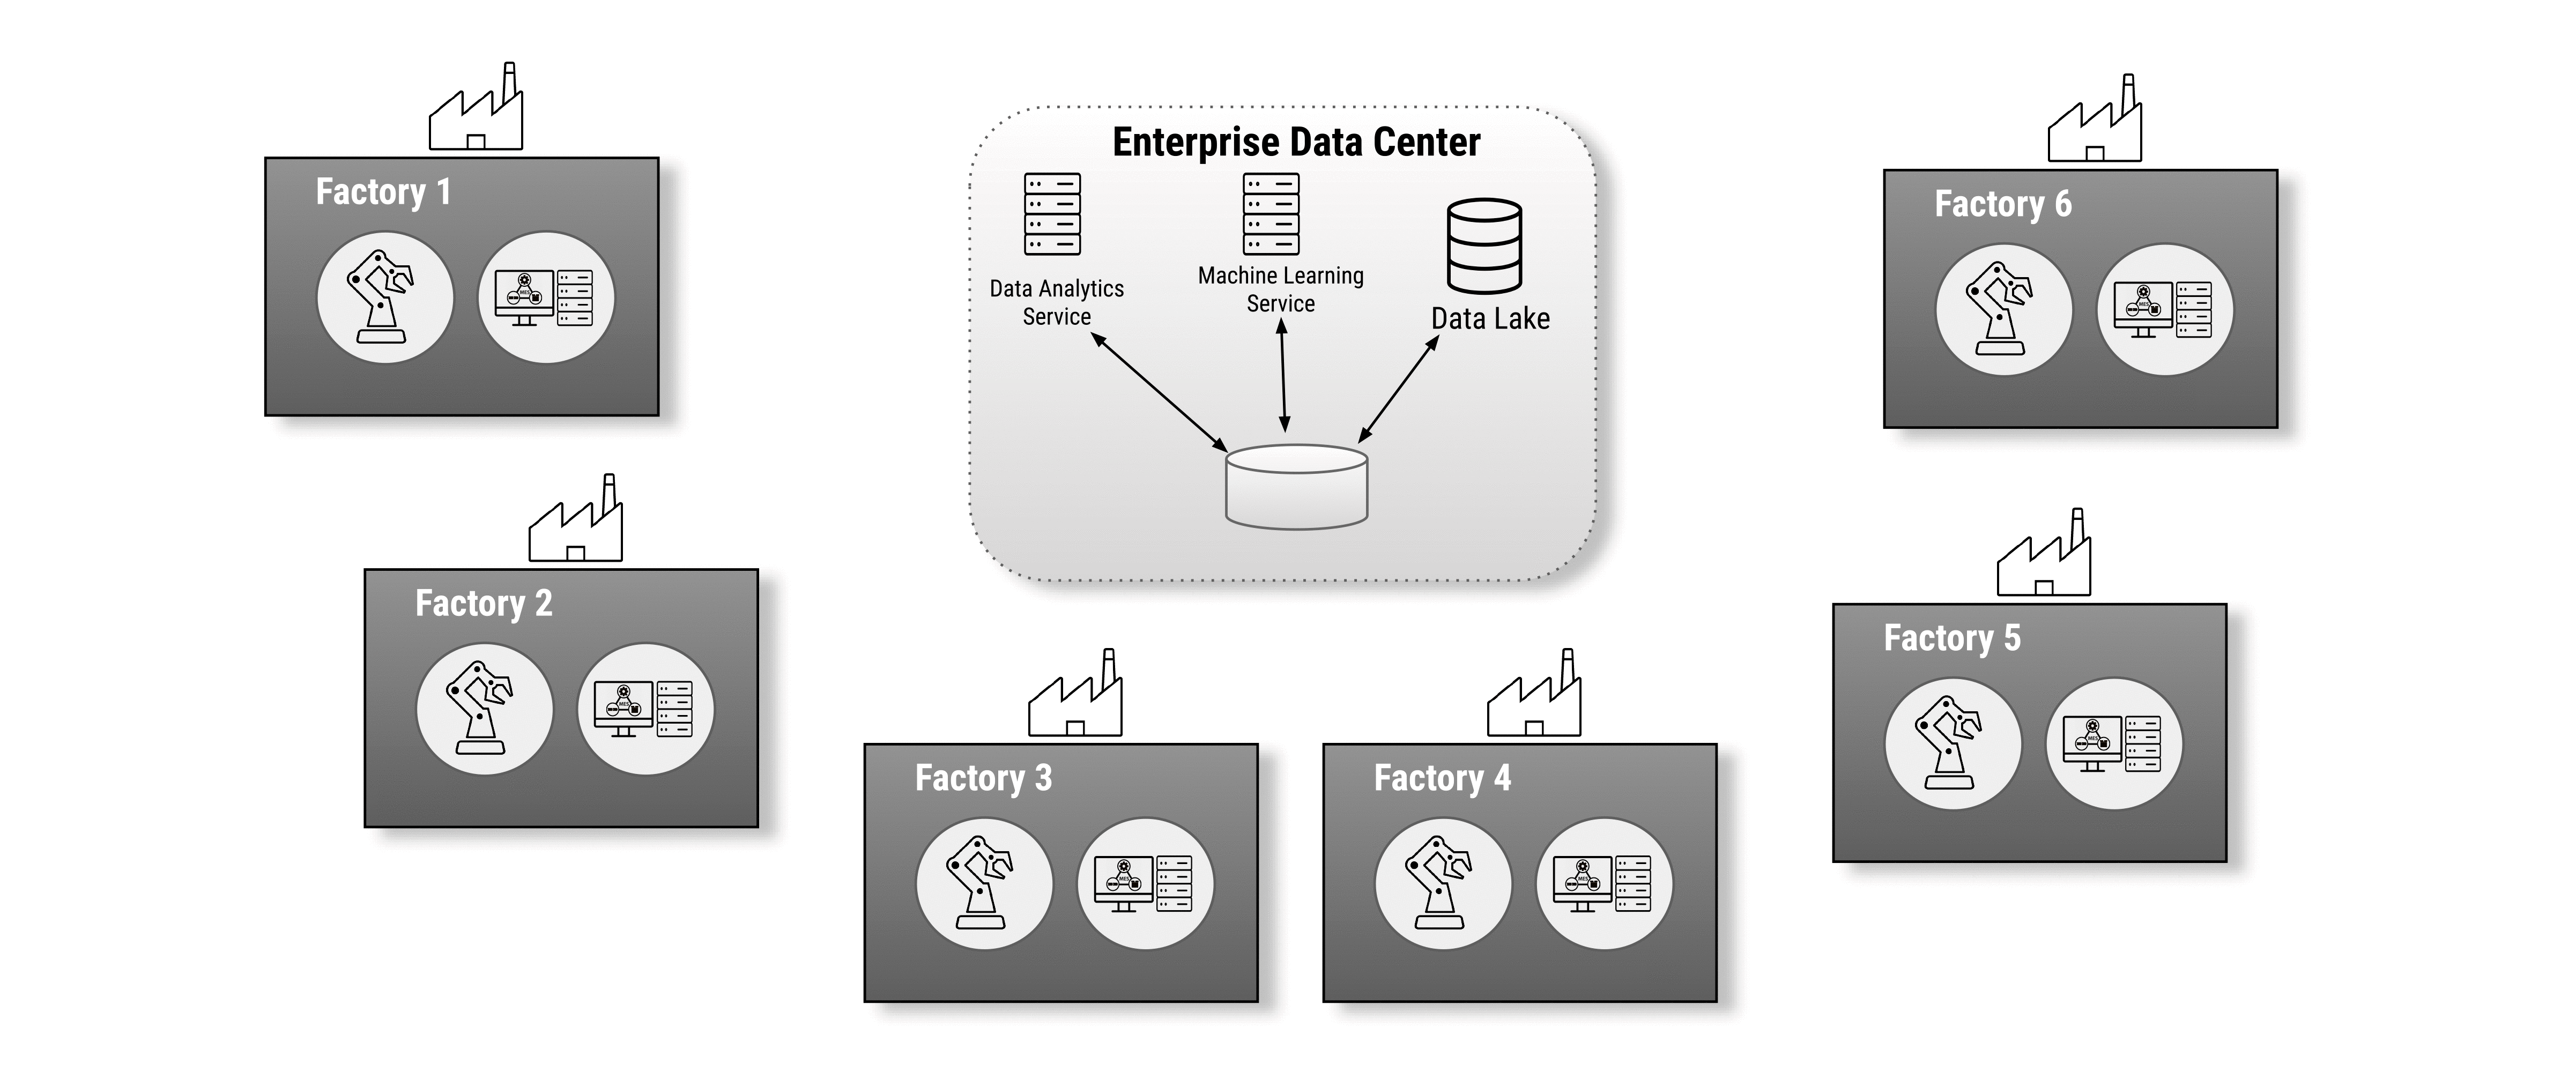 Inter-factory Connection in an Enterprise Data Center